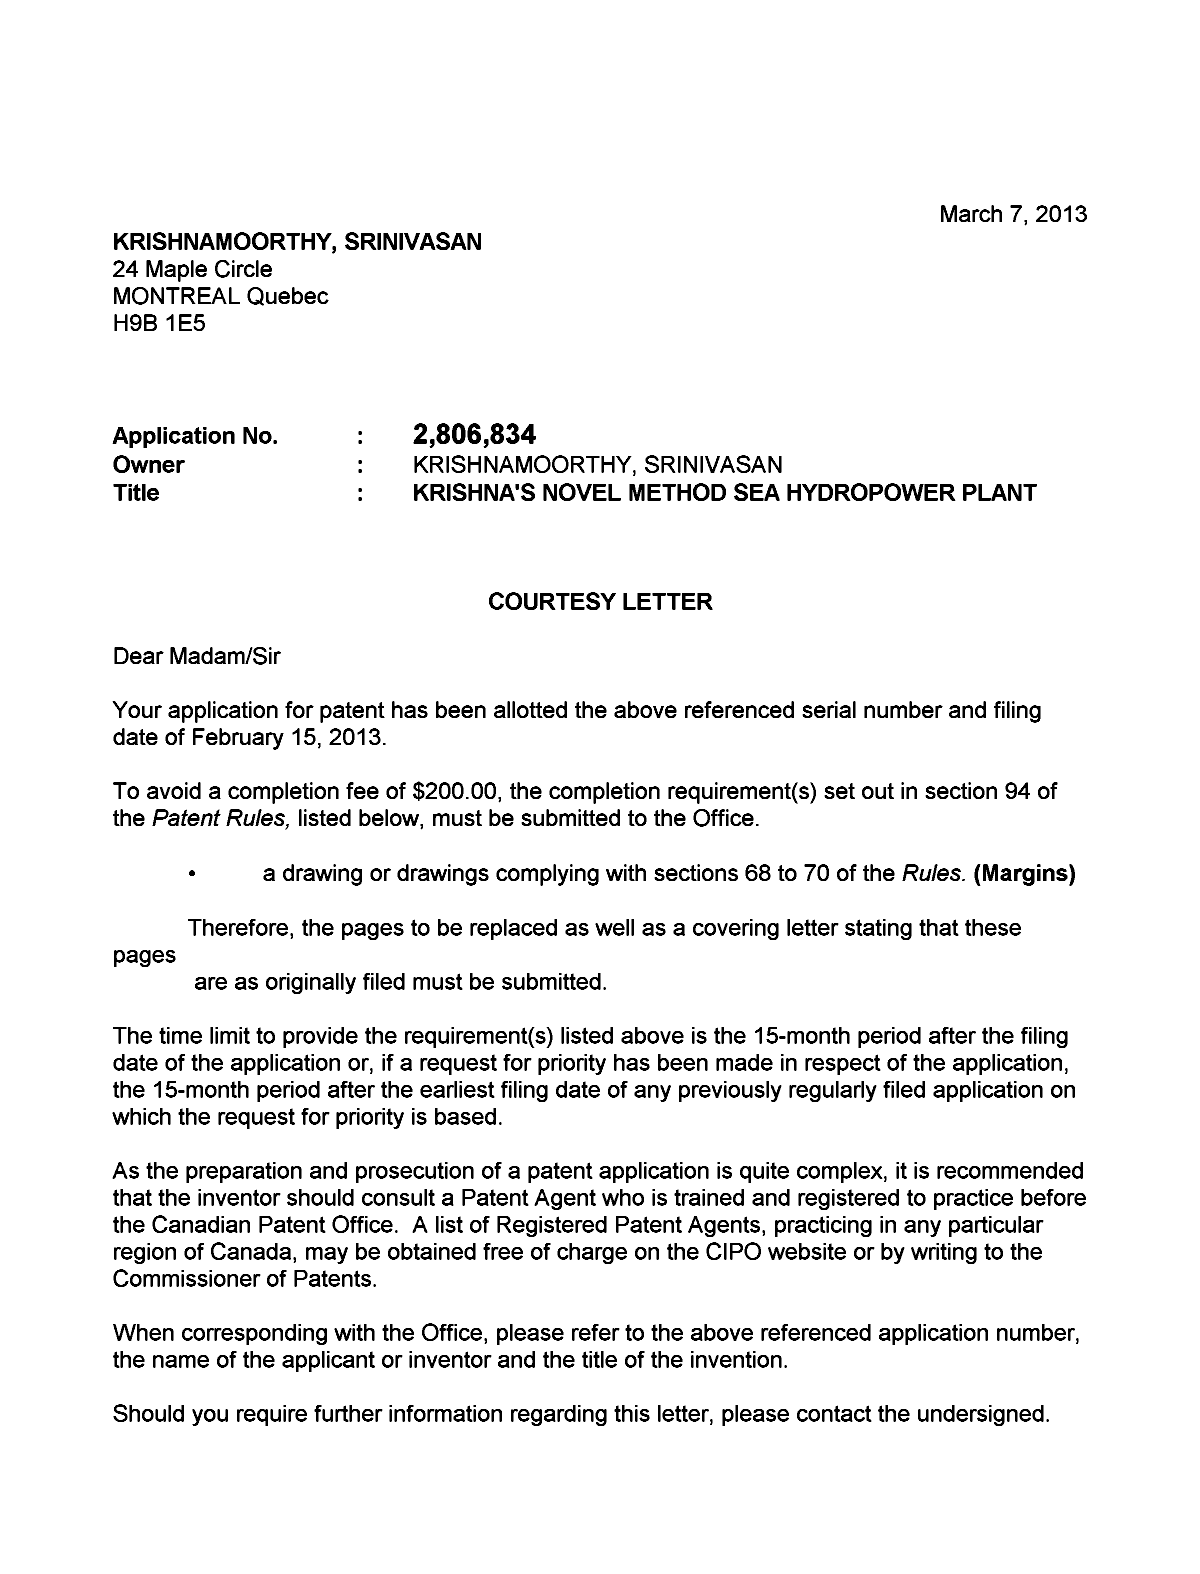 Canadian Patent Document 2806834. Correspondence 20121207. Image 1 of 2